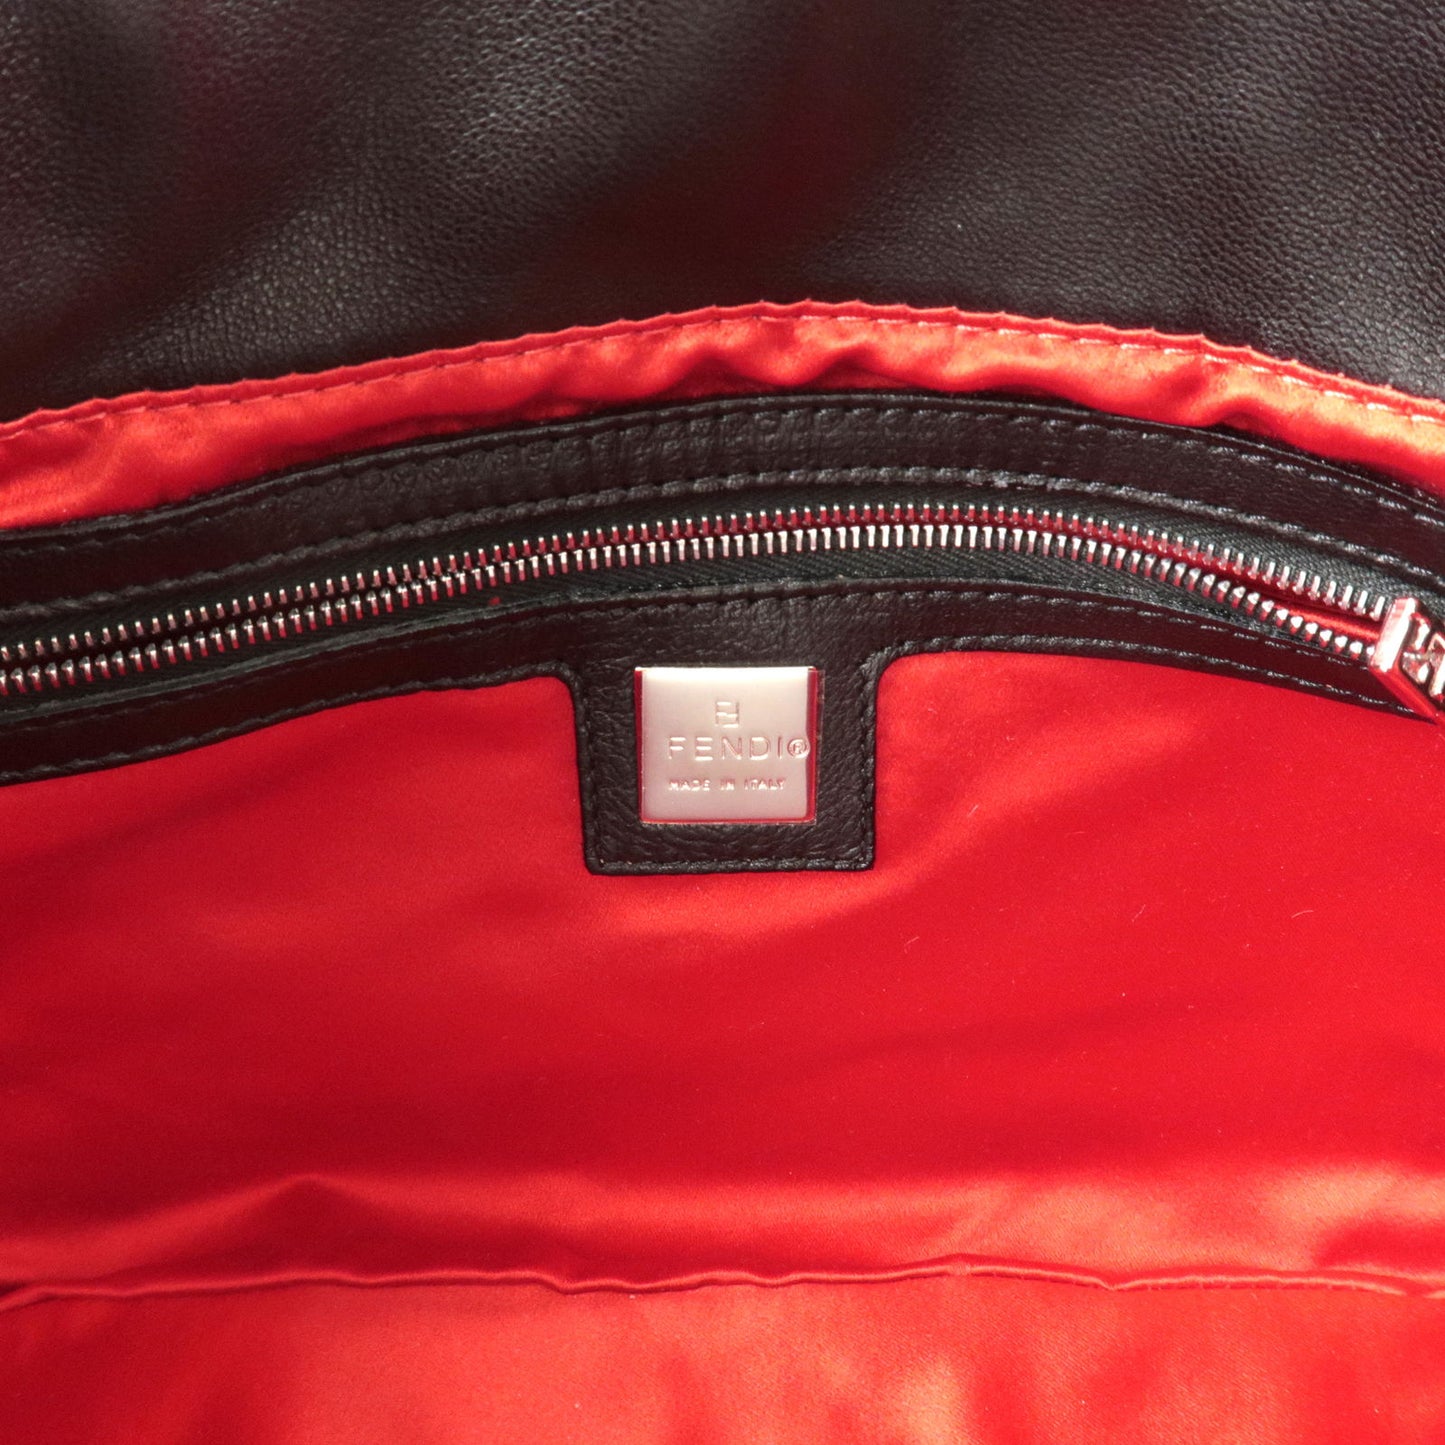 FENDI Leather Mamma Baguette Shoulder Bag Purse Black 26325